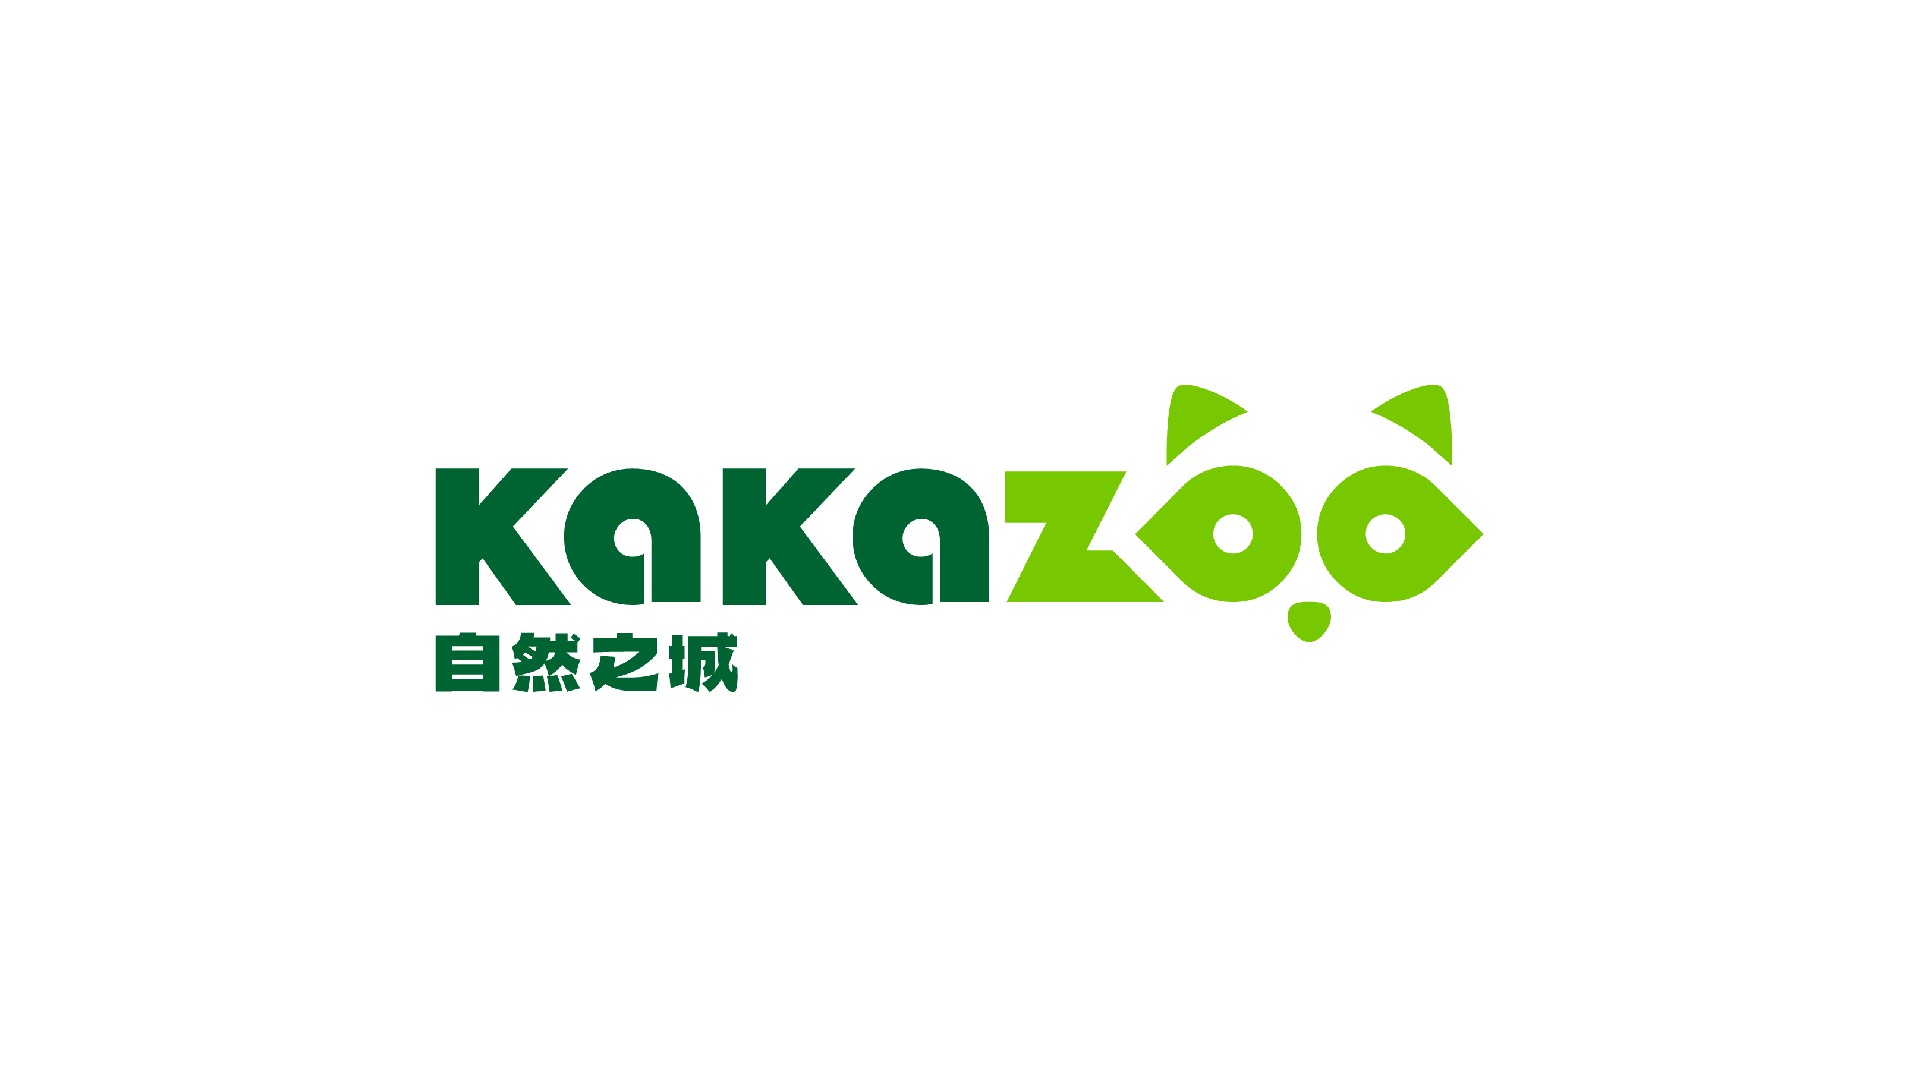 kakazoo_画板 1.jpg